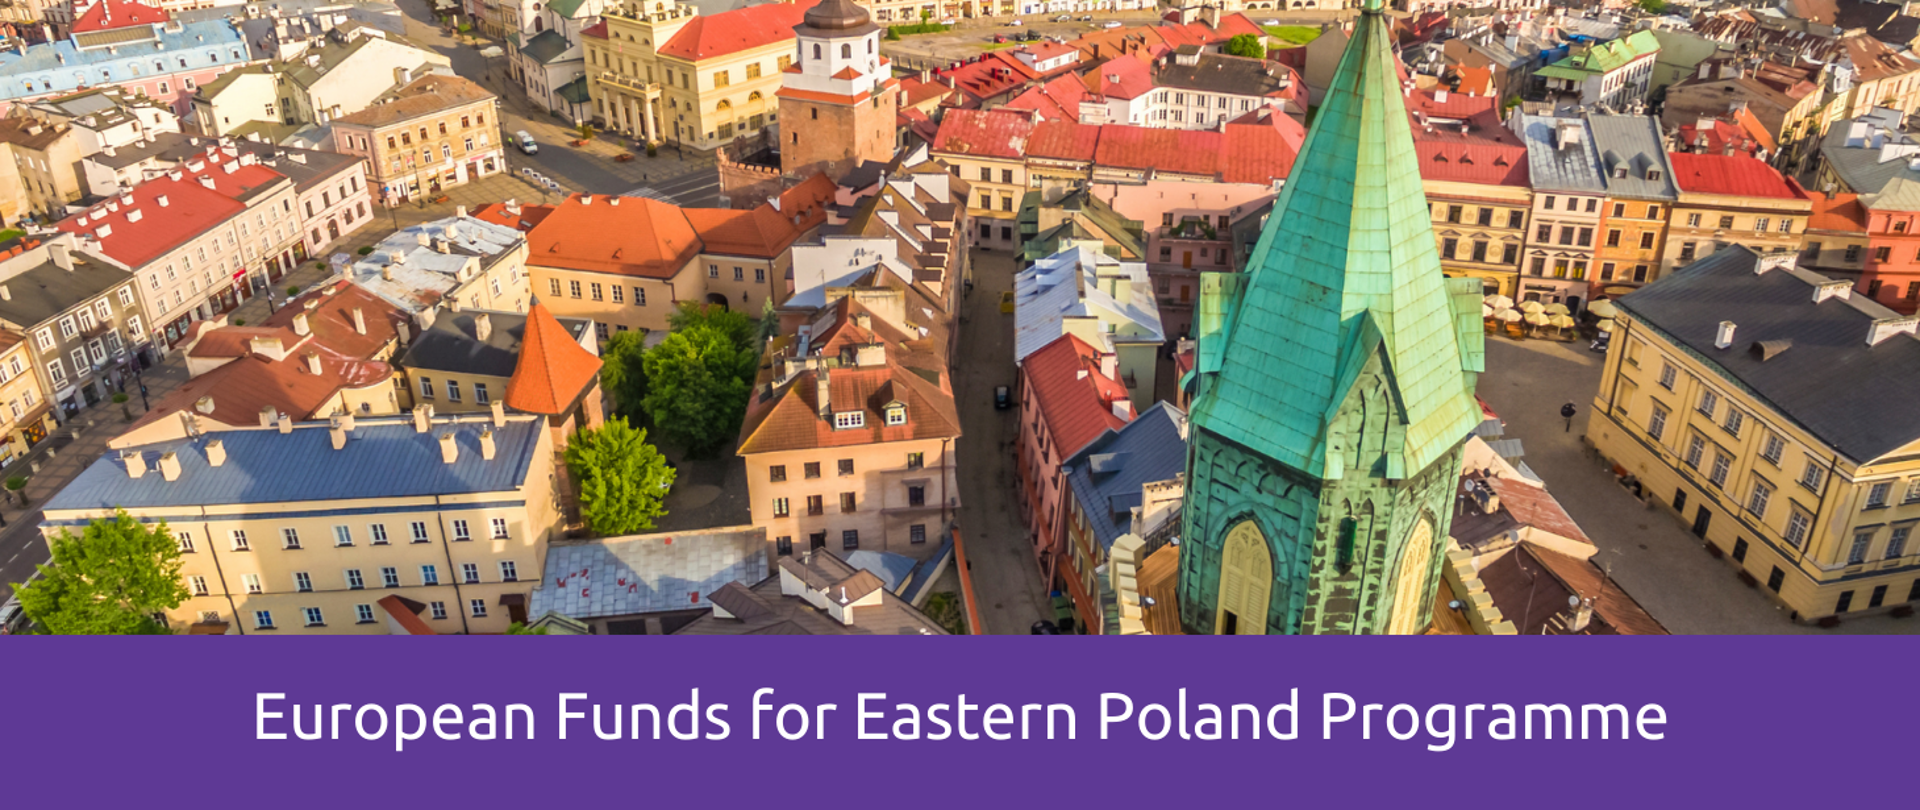 European Funds for Eastern Poland Programme